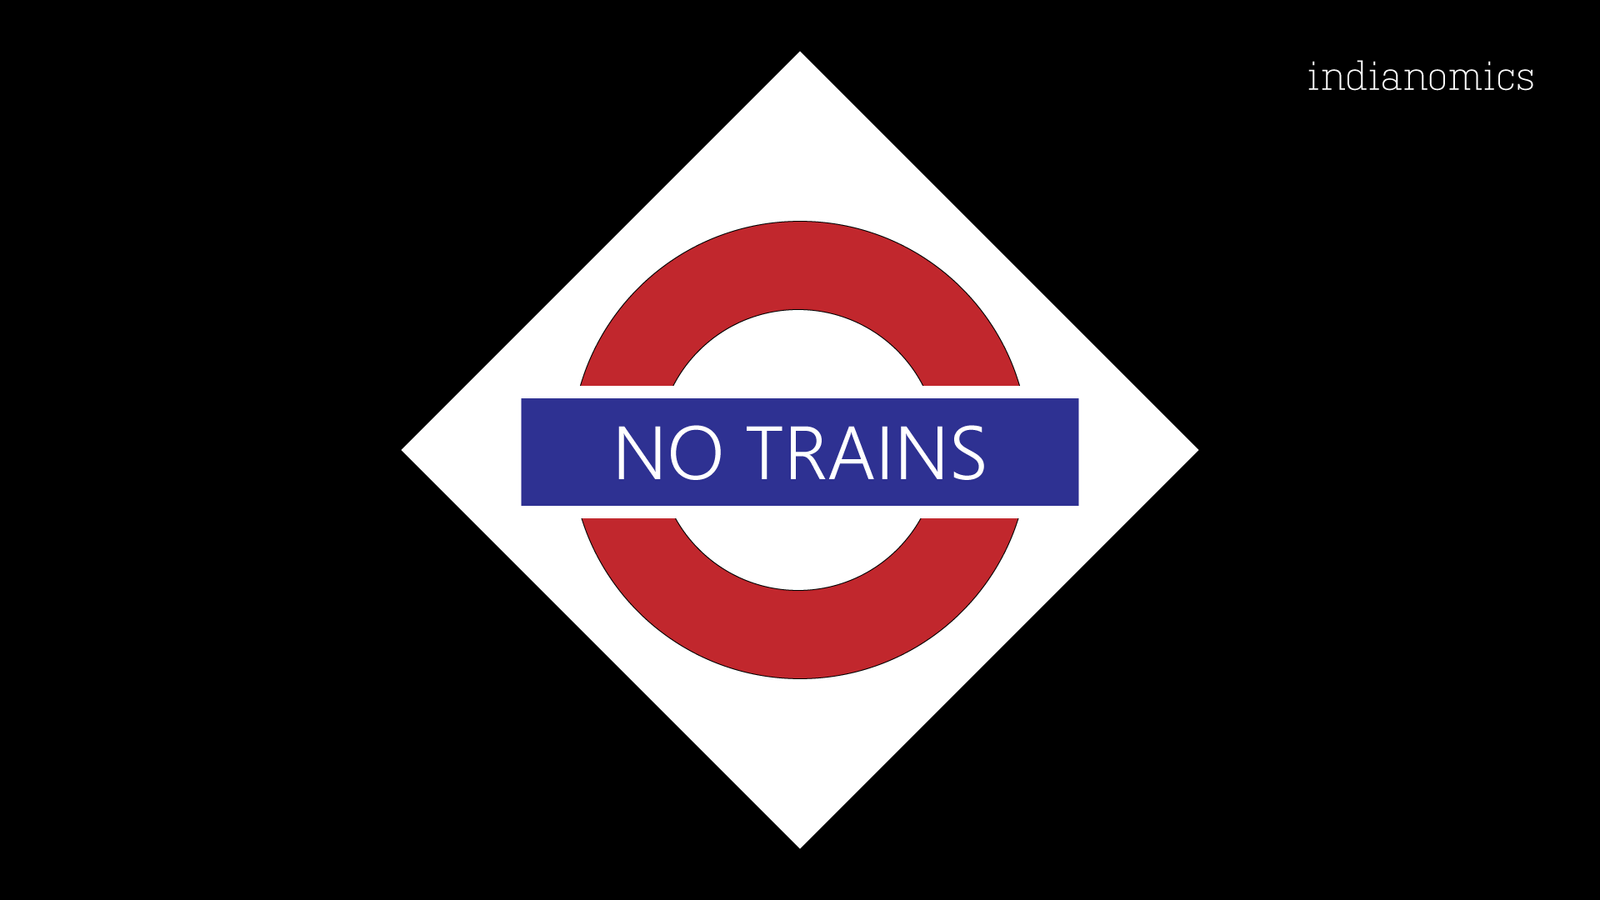 No trains